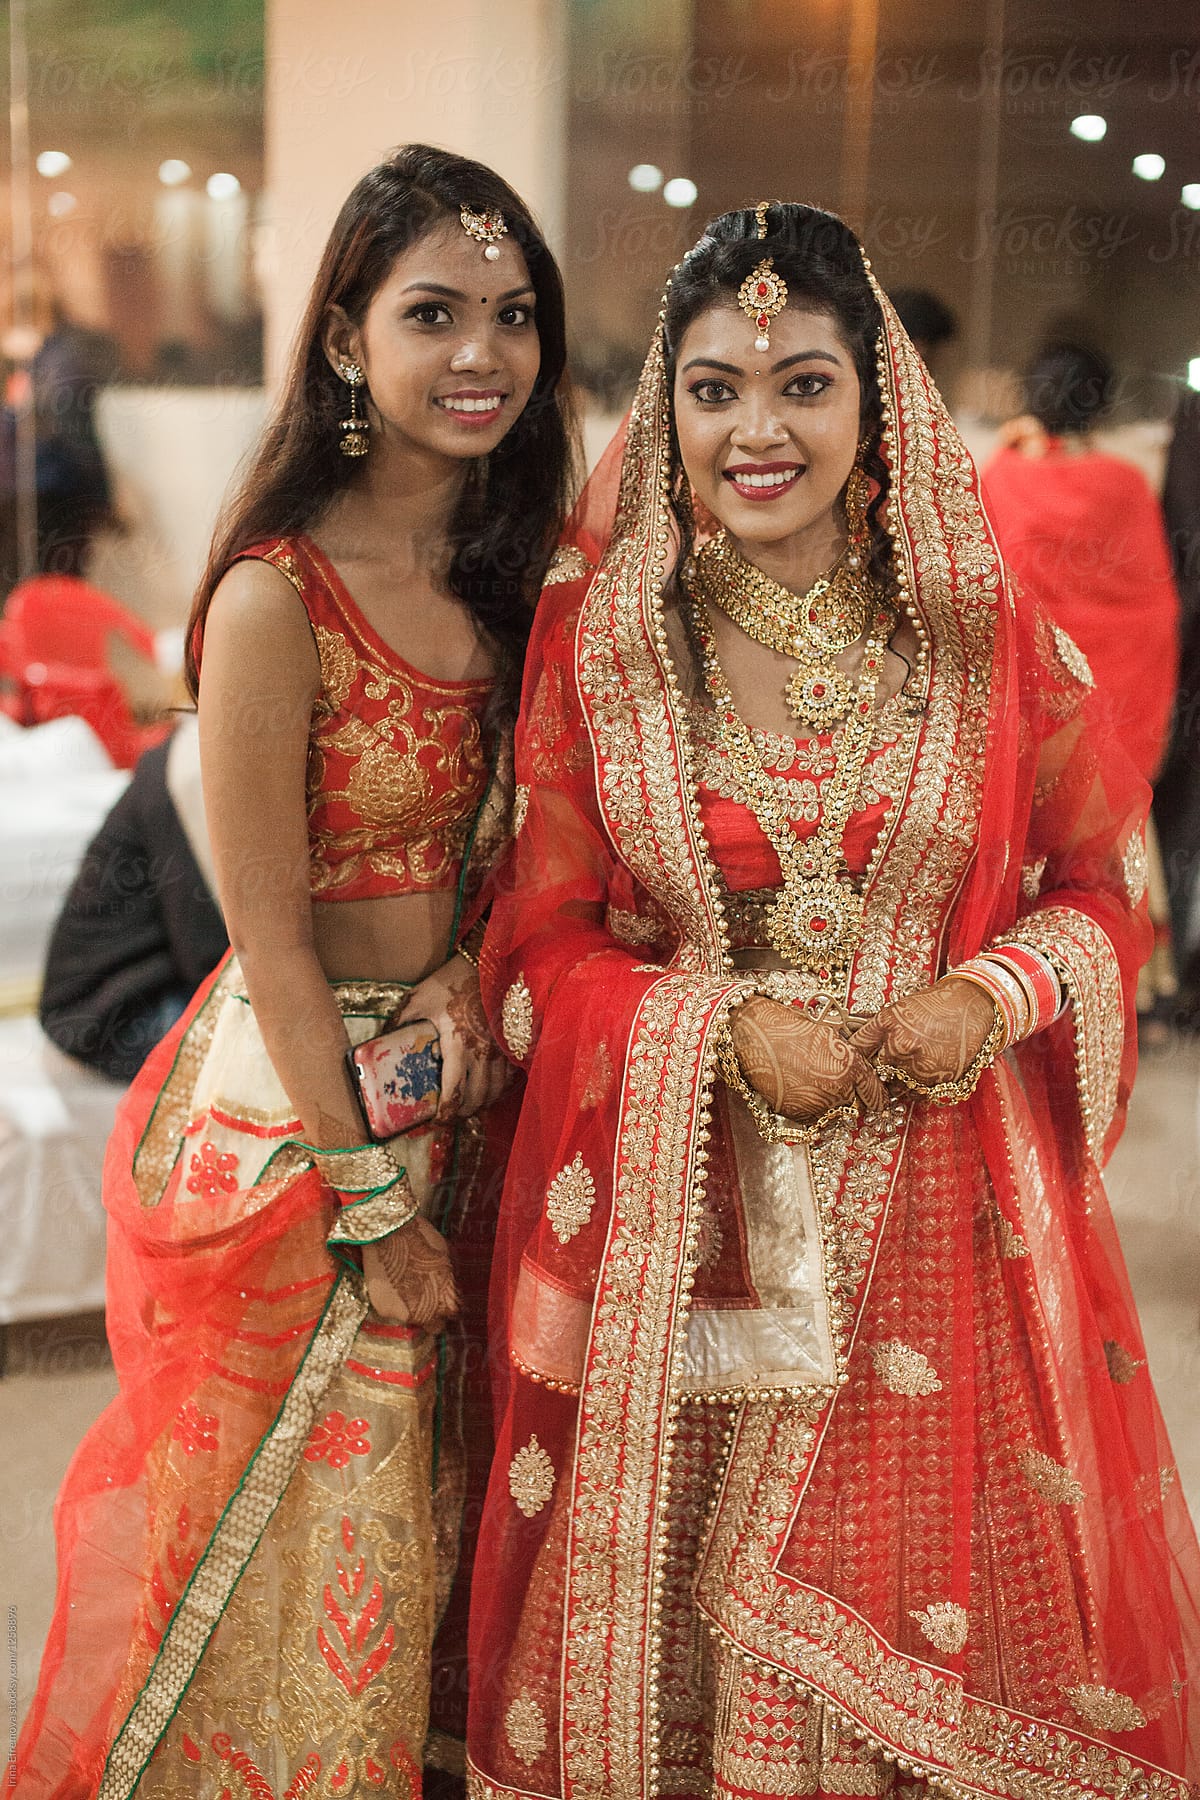 Indian Bride With Her Sister By Stocksy Contributor Irina Efremova Stocksy